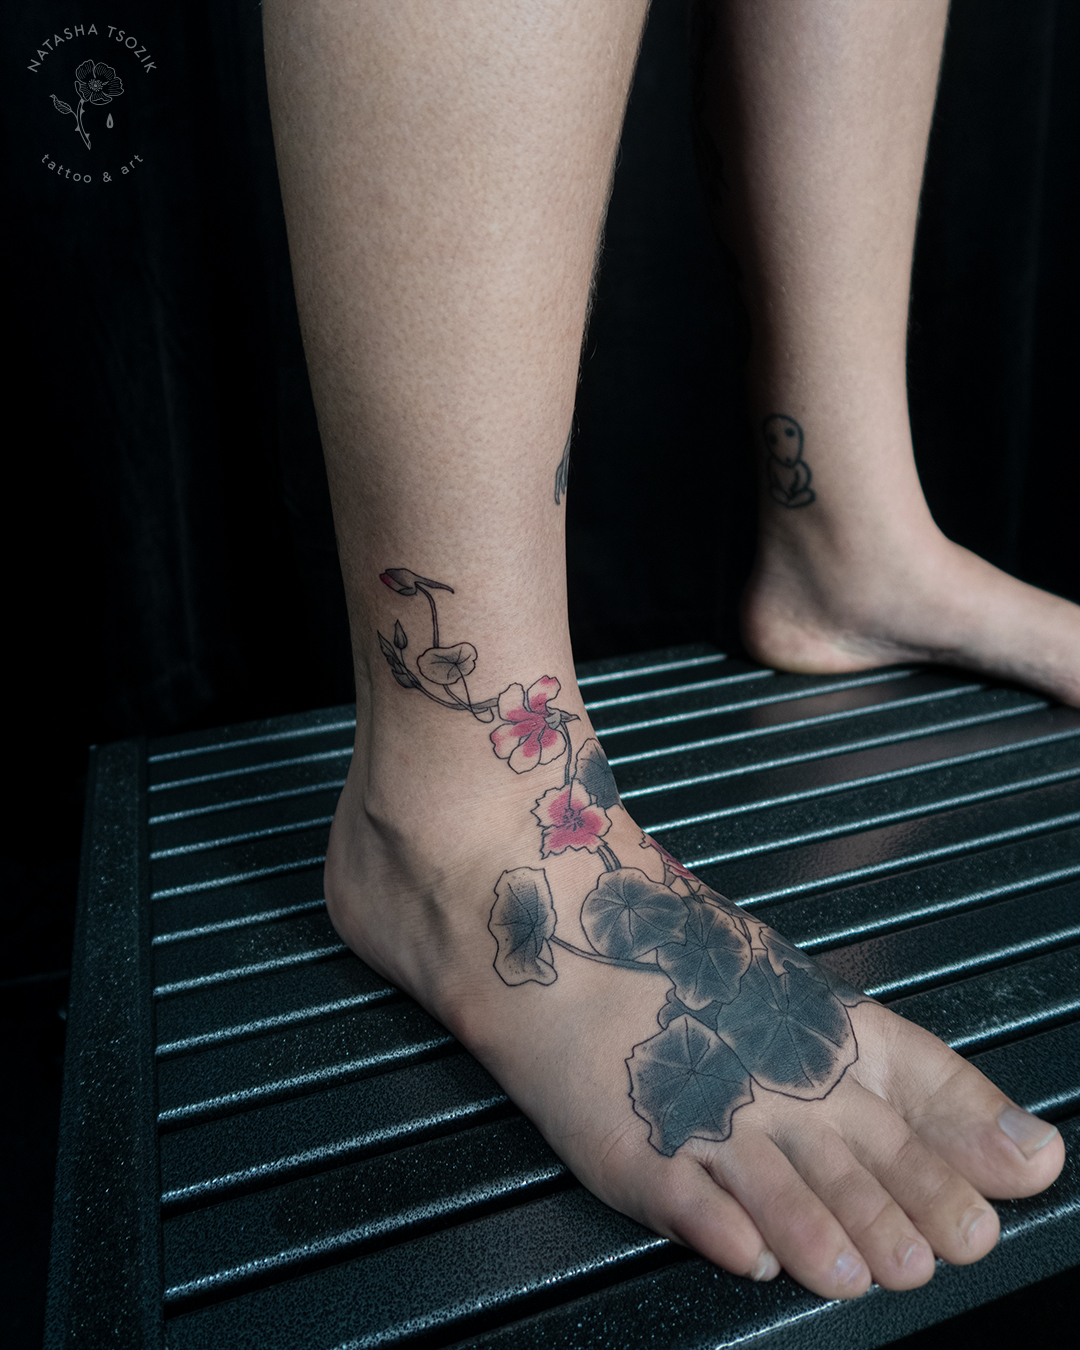 Nasturtium tattoo on a feet.